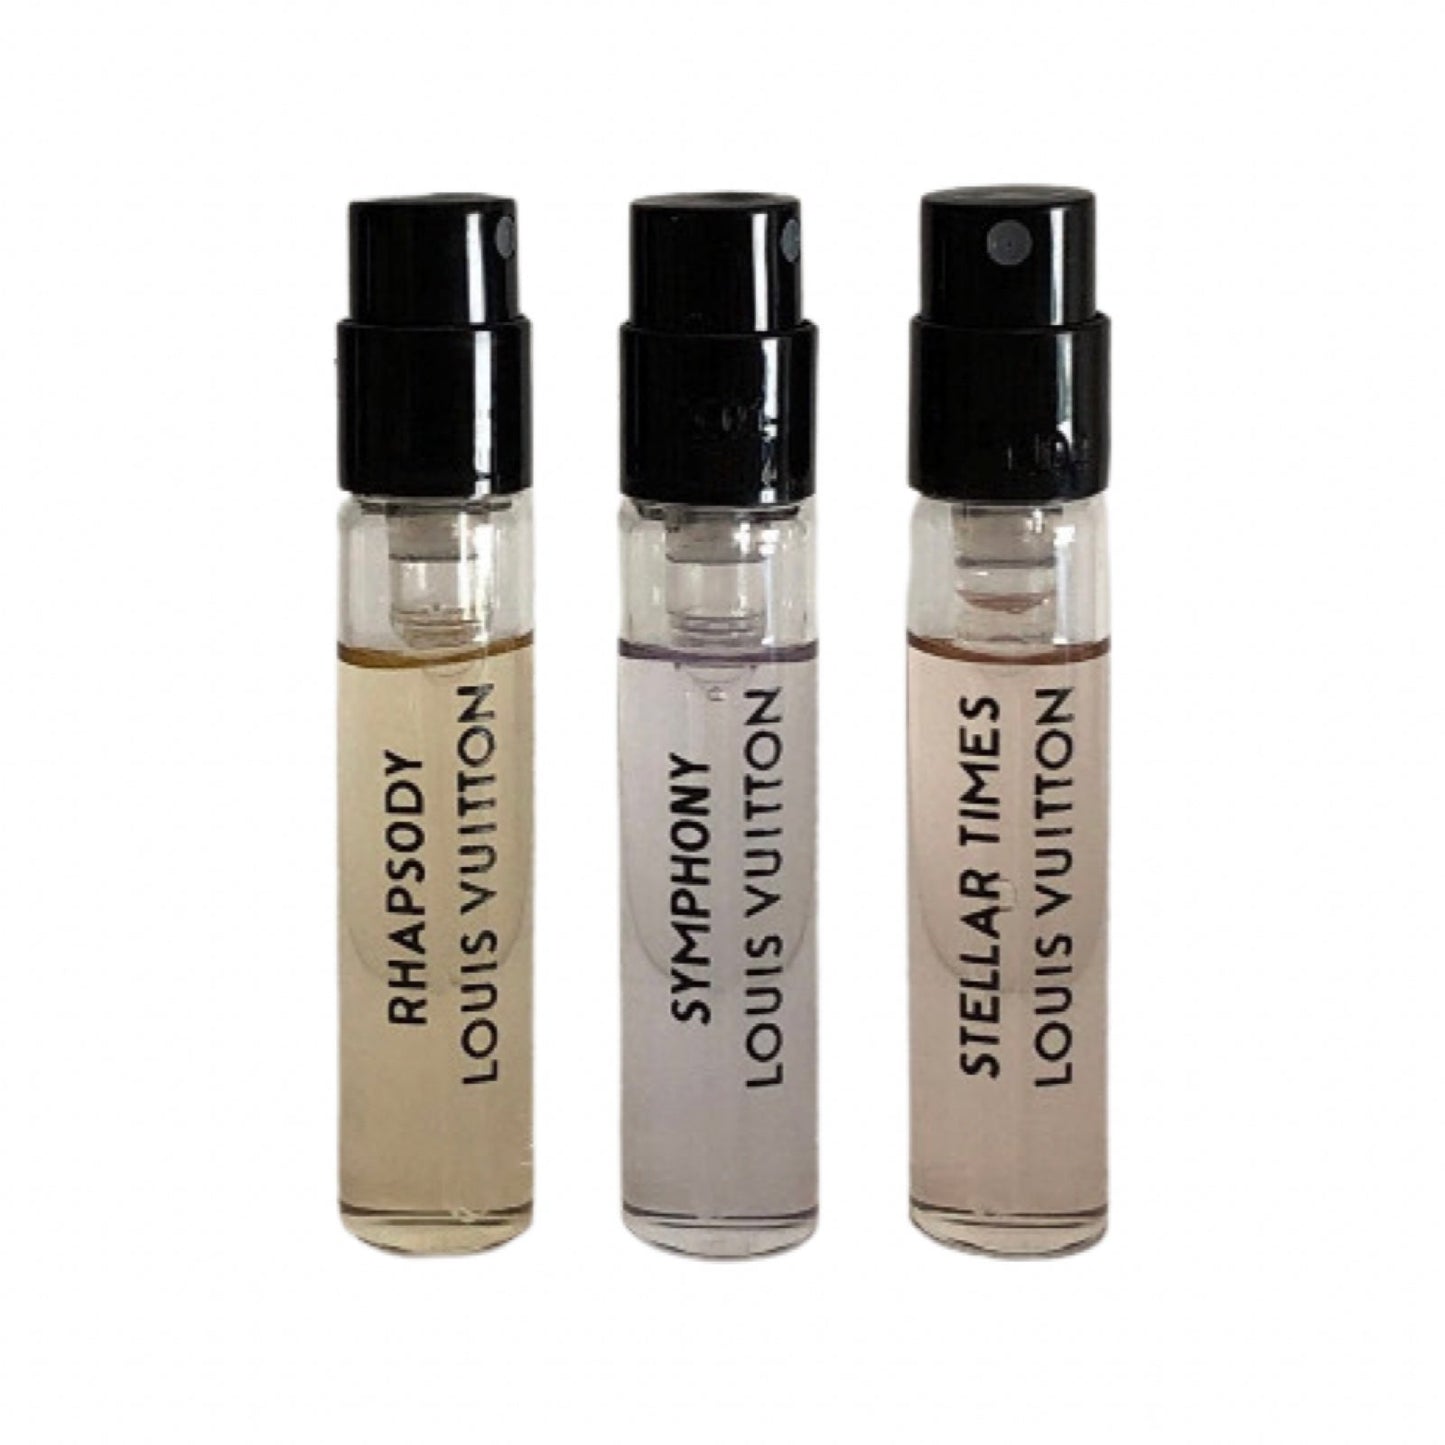 Louis Vuitton Stellar Times Extrait de Parfum 2ml official sample –